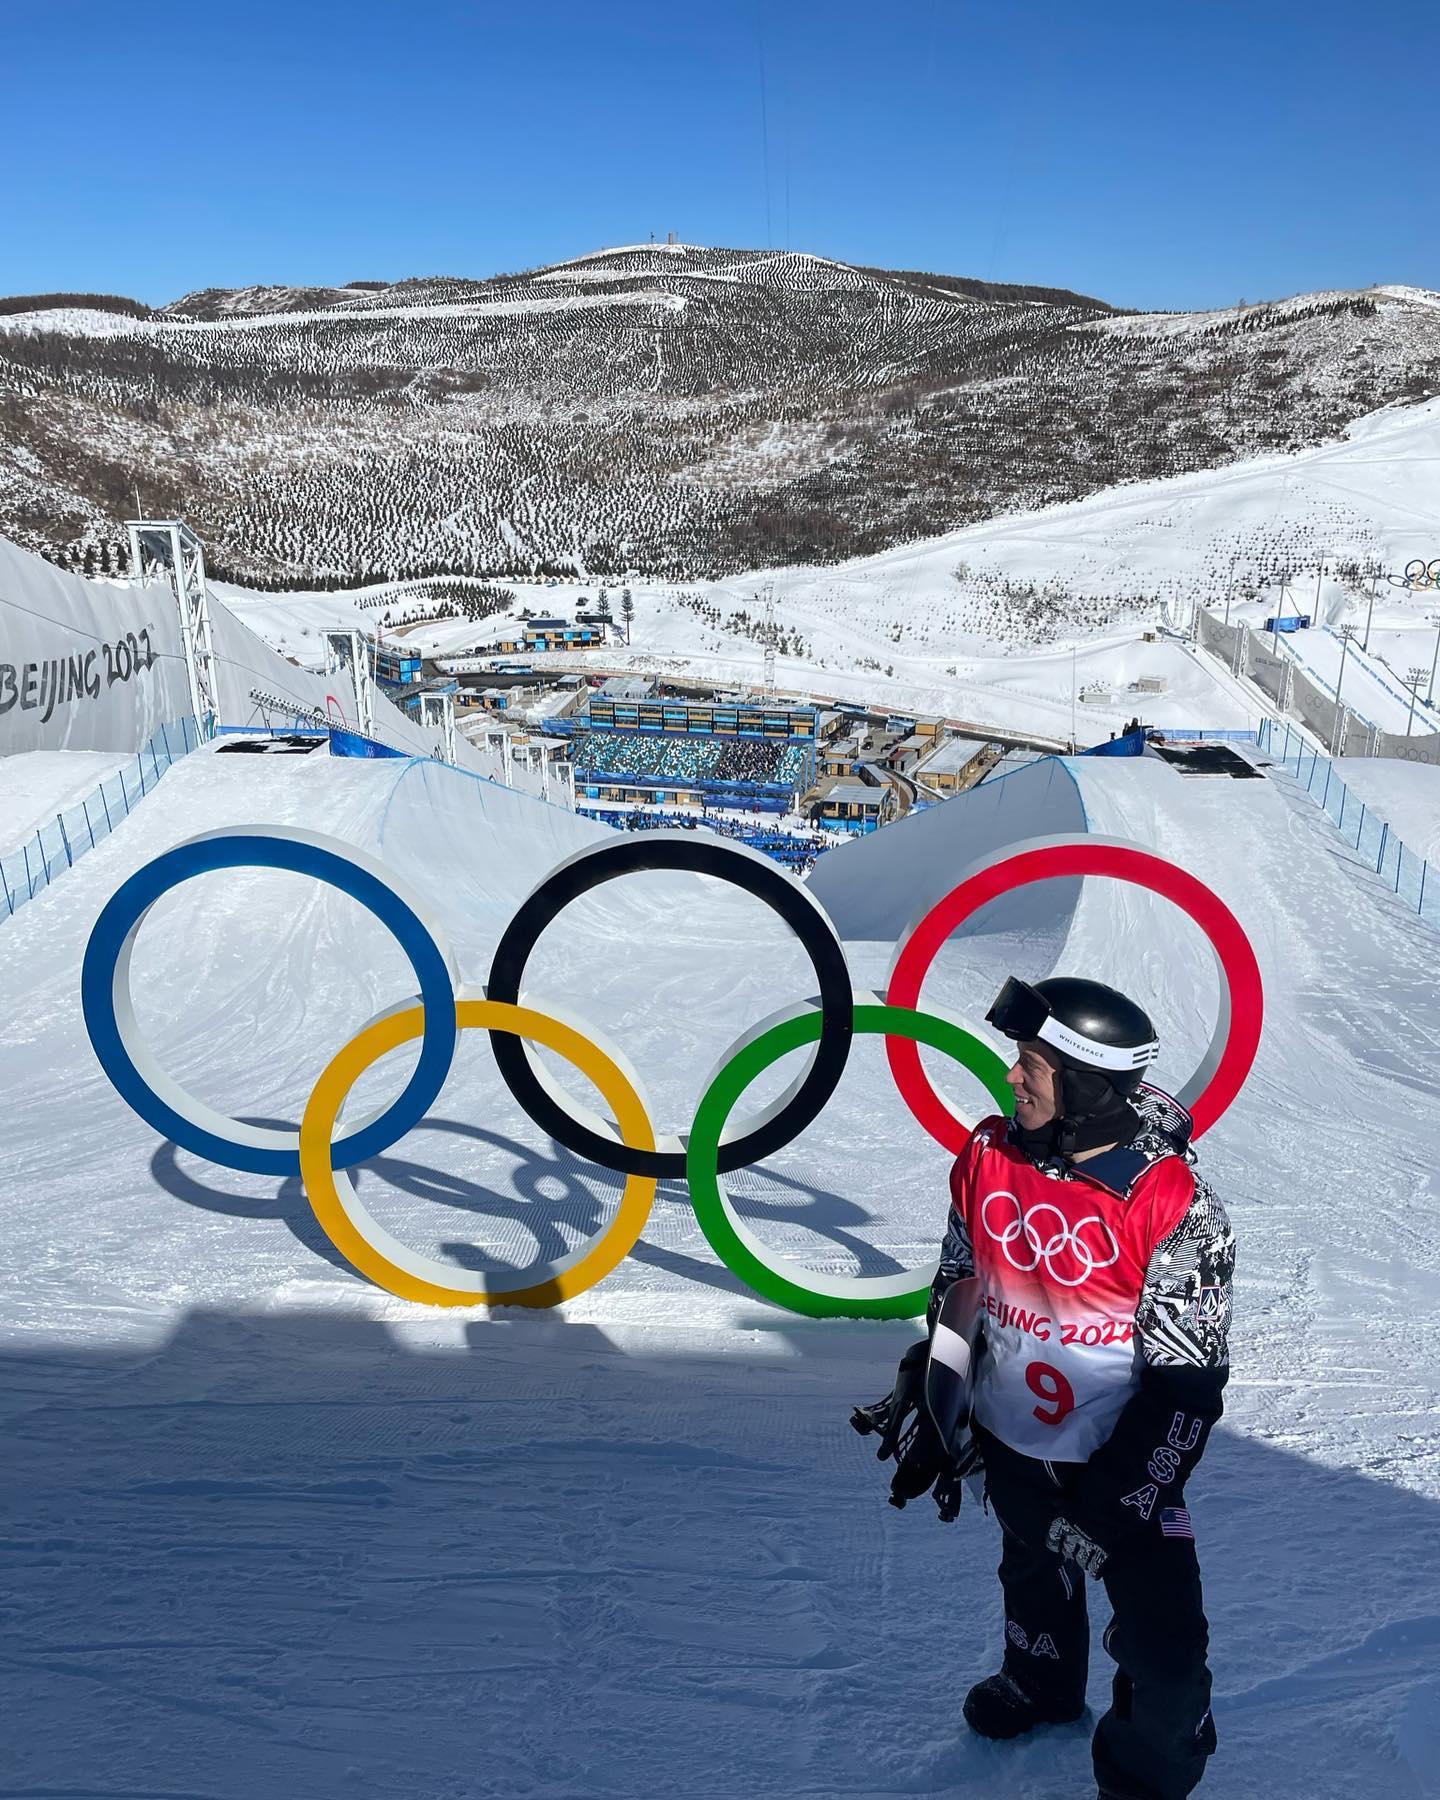 Shaun White at the 2022 Olympics